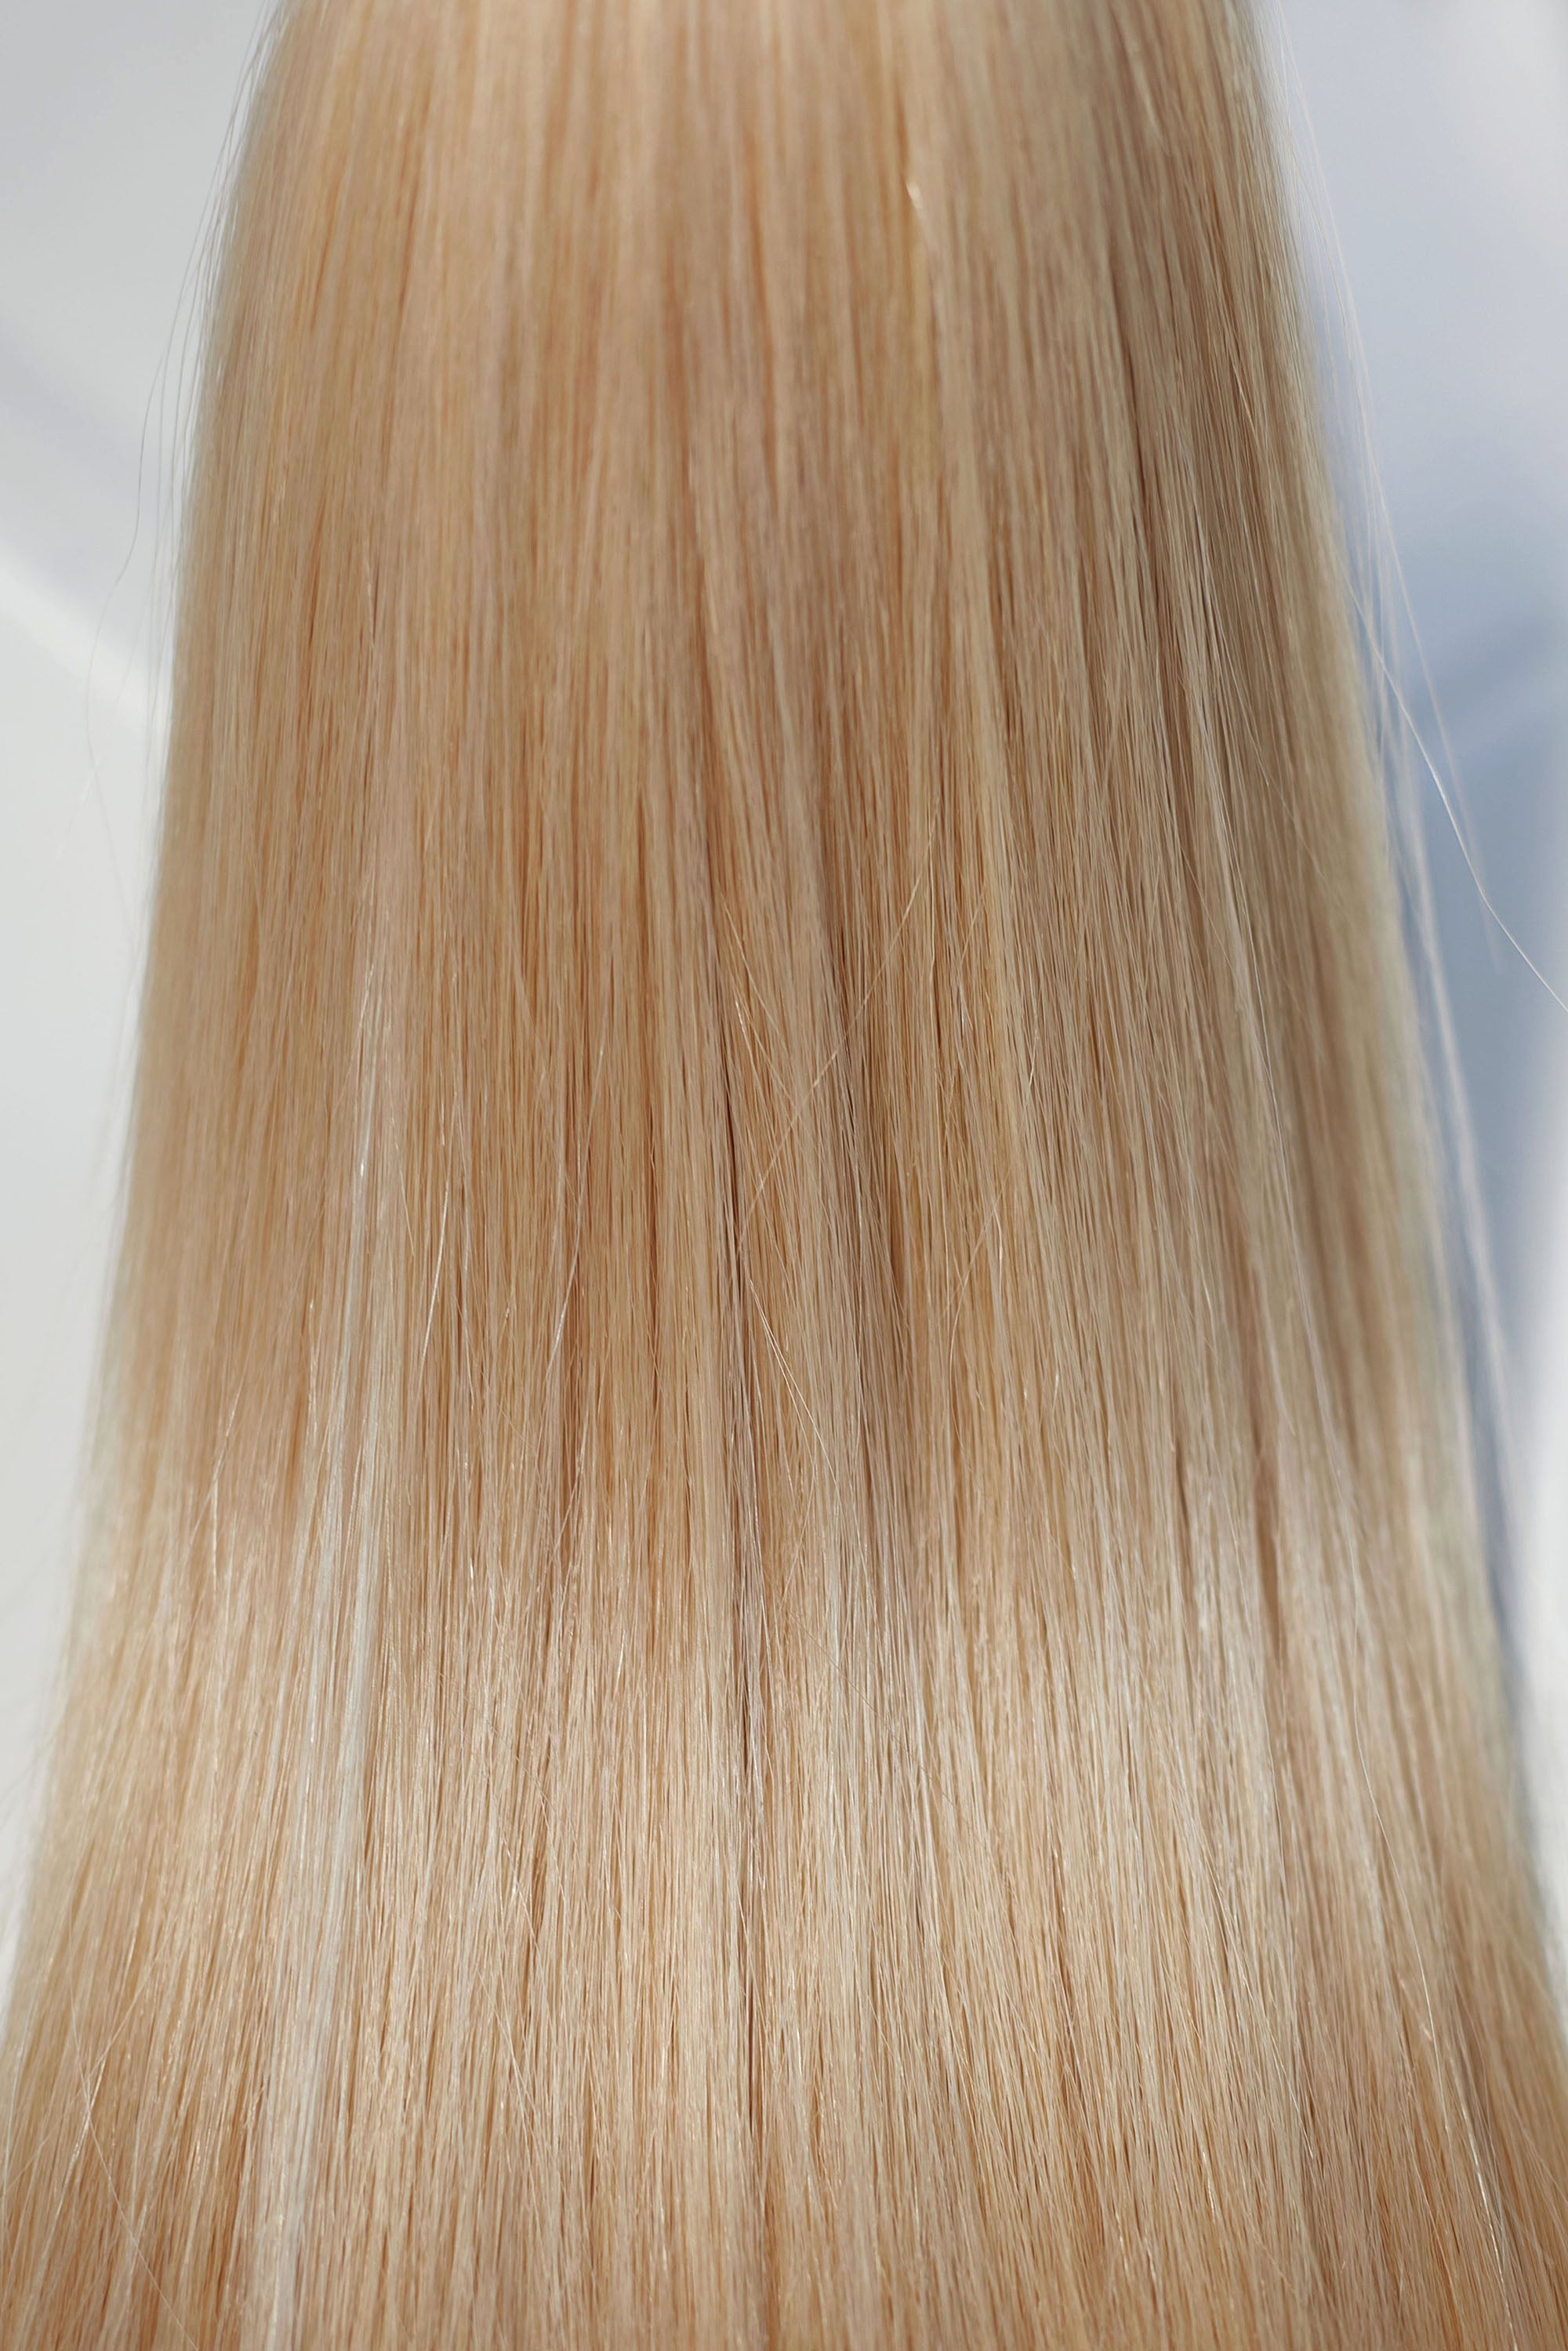 Behair professional Keratin Tip "Premium" 22" (55cm) Natural Straight Light Gold Blond #24 - 25g (Micro - 0.5g each pcs) hair extensions